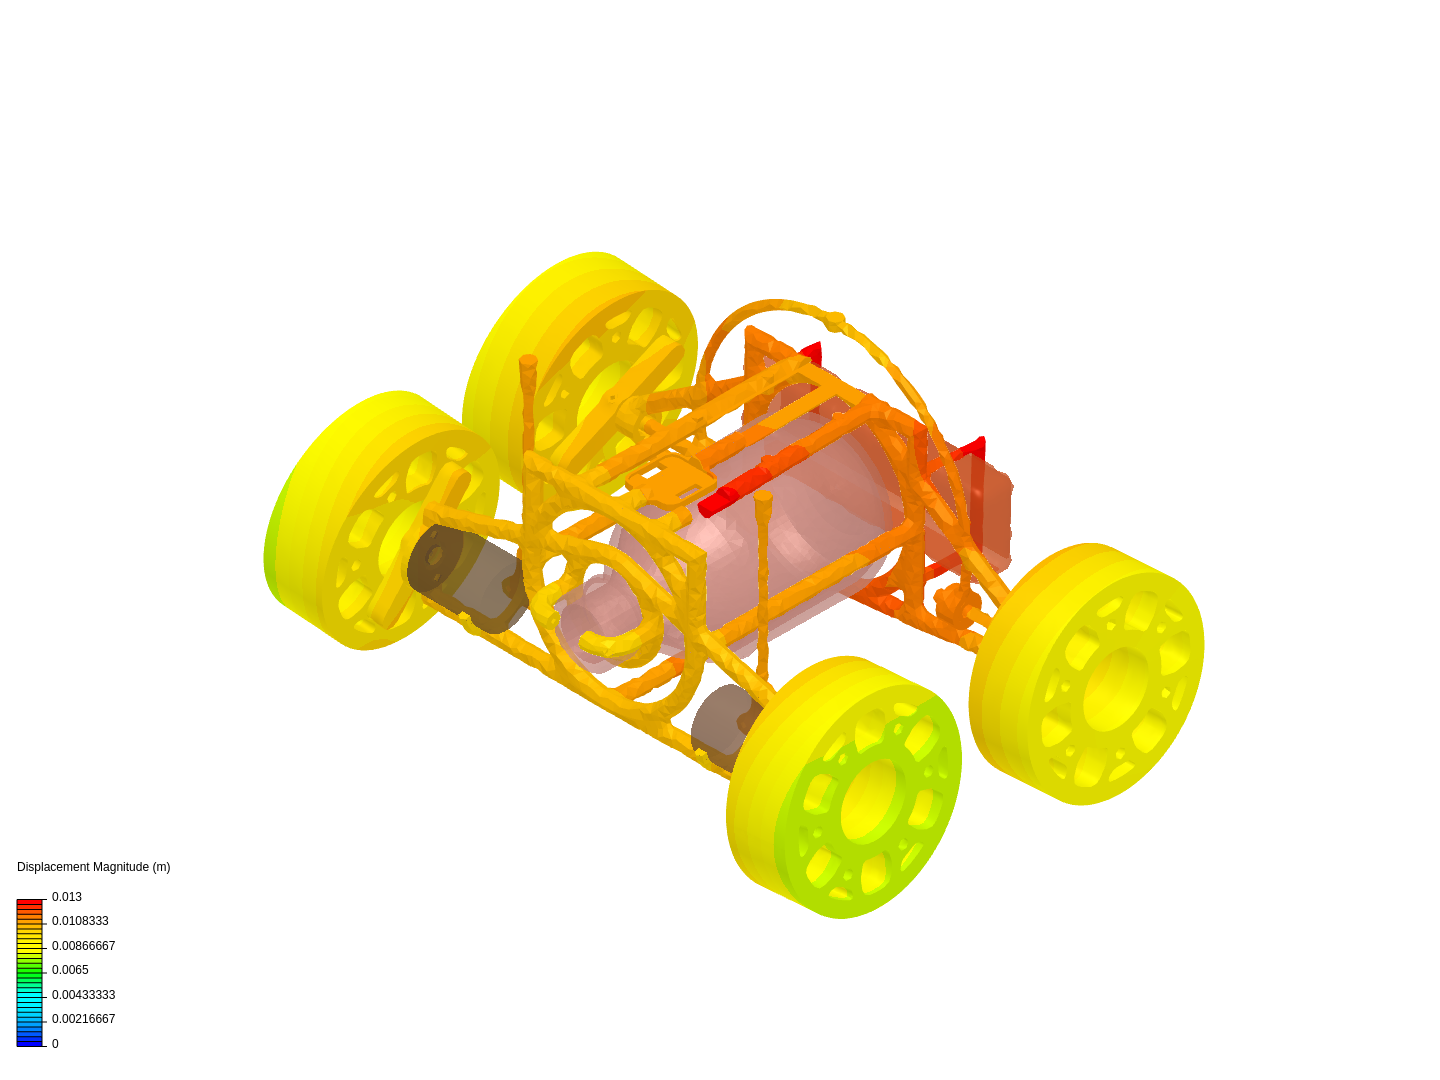 full rover image